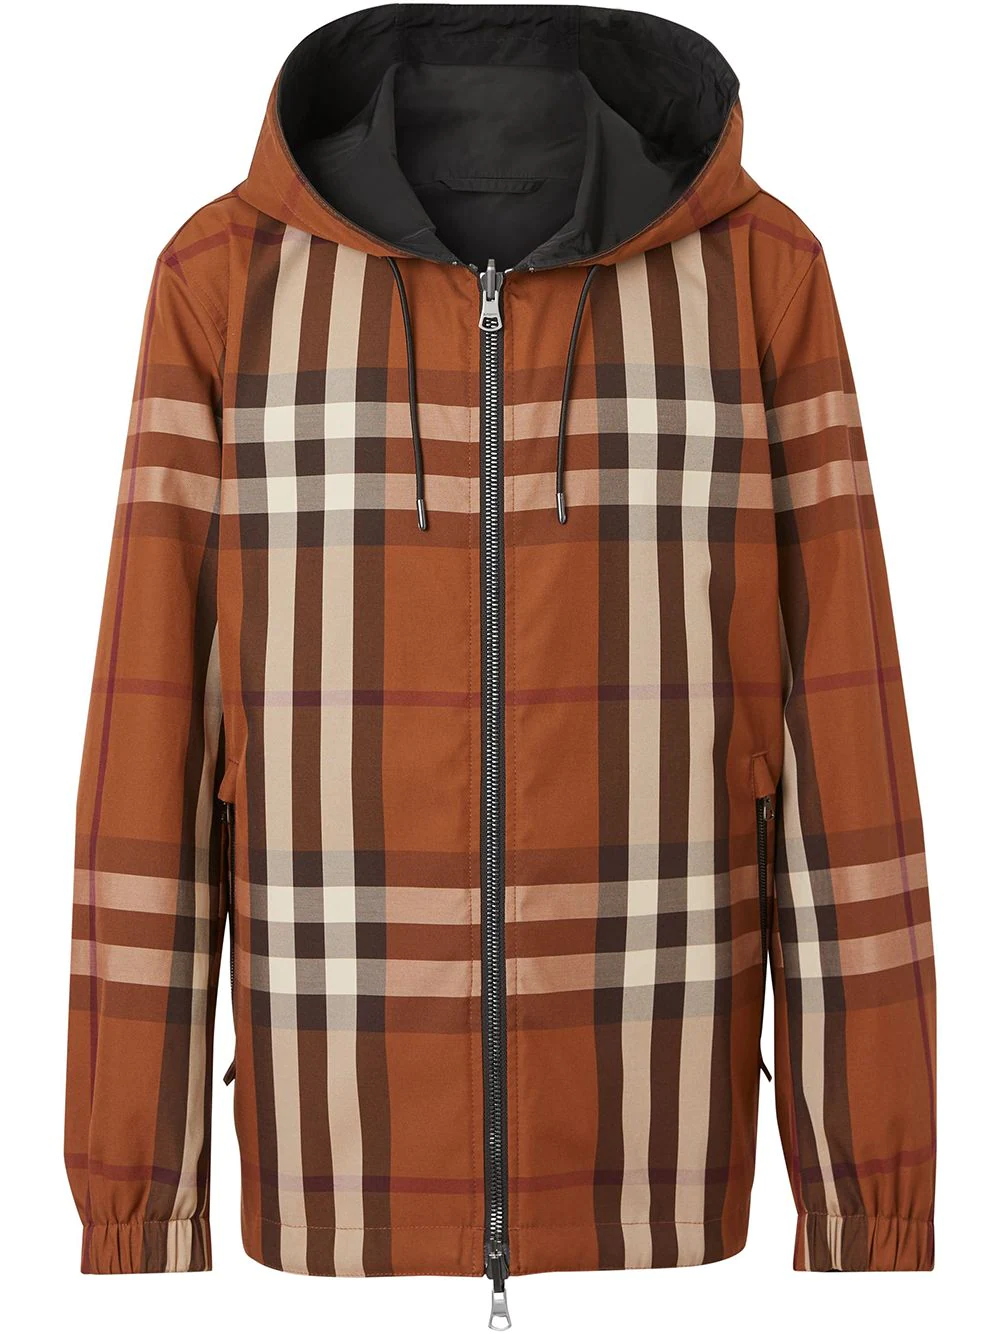 Burberry reversible check-pattern jacket